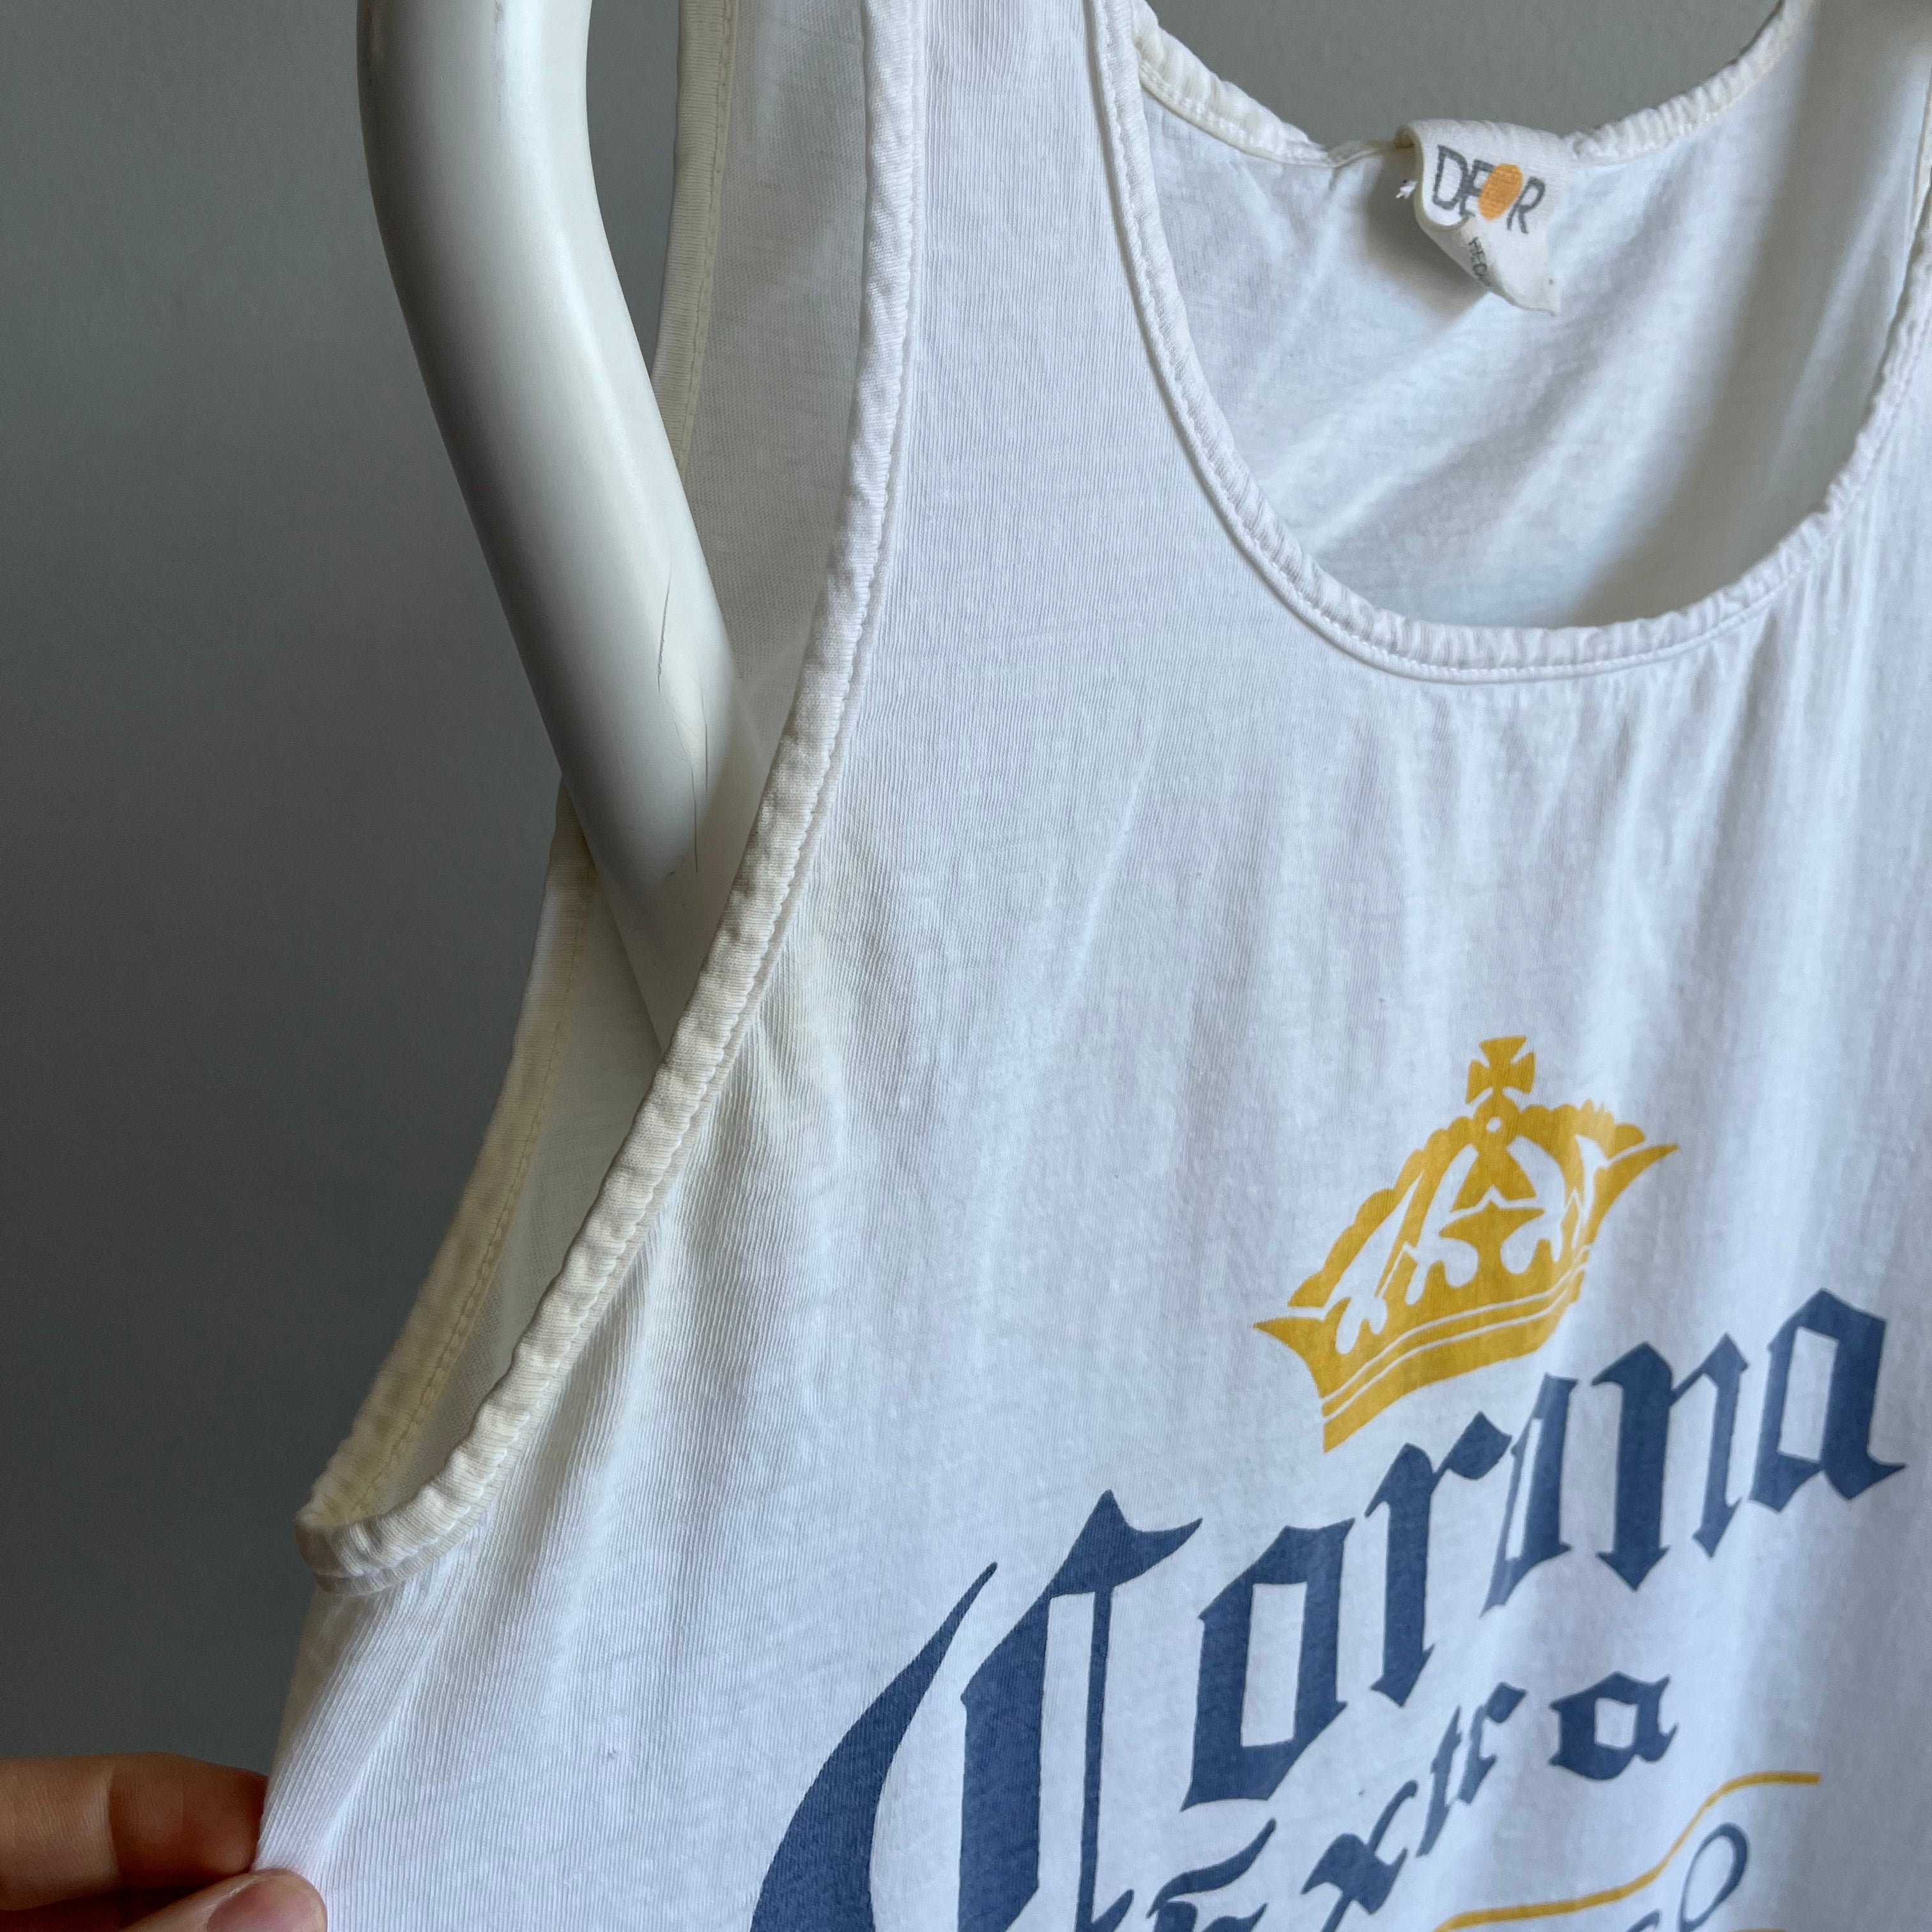 1990/ 2000s Corona T-Shirt - Made in MX